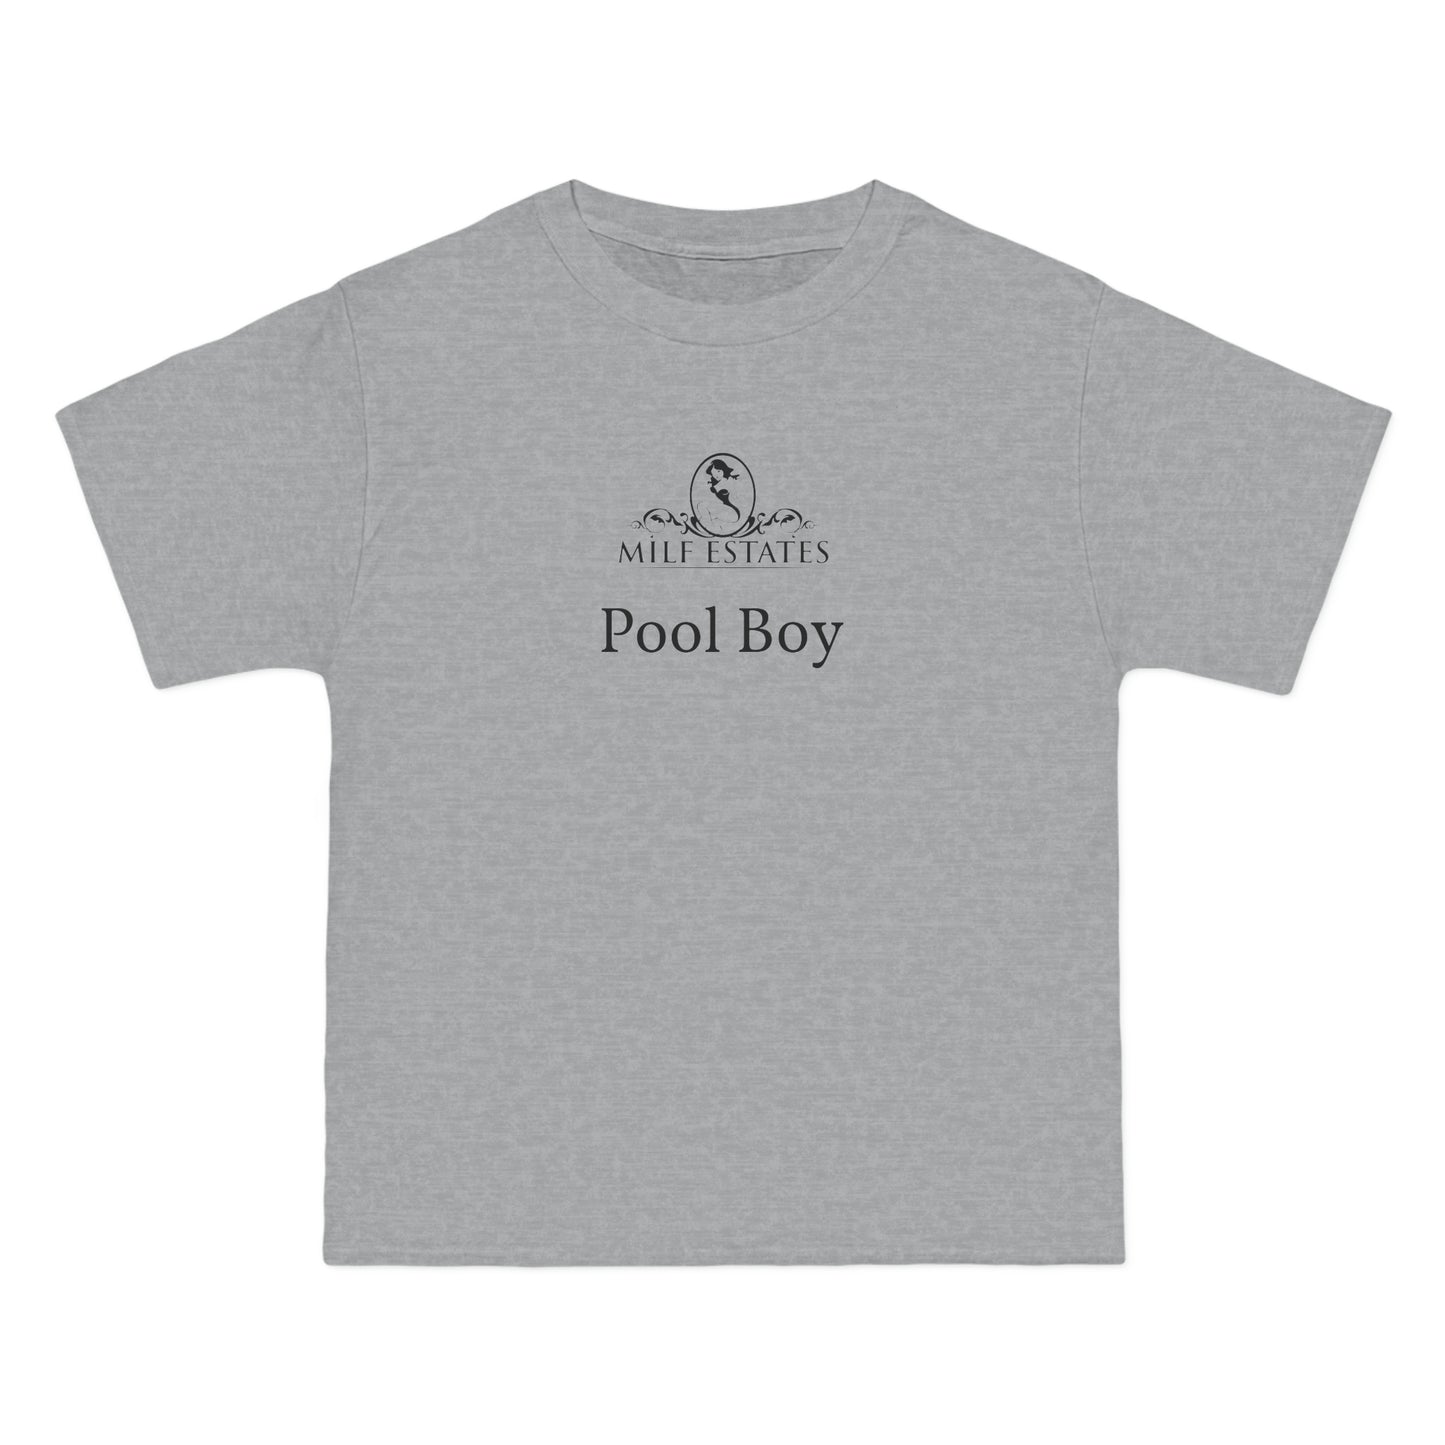 MILF ESTATES Logo- Pool Boy